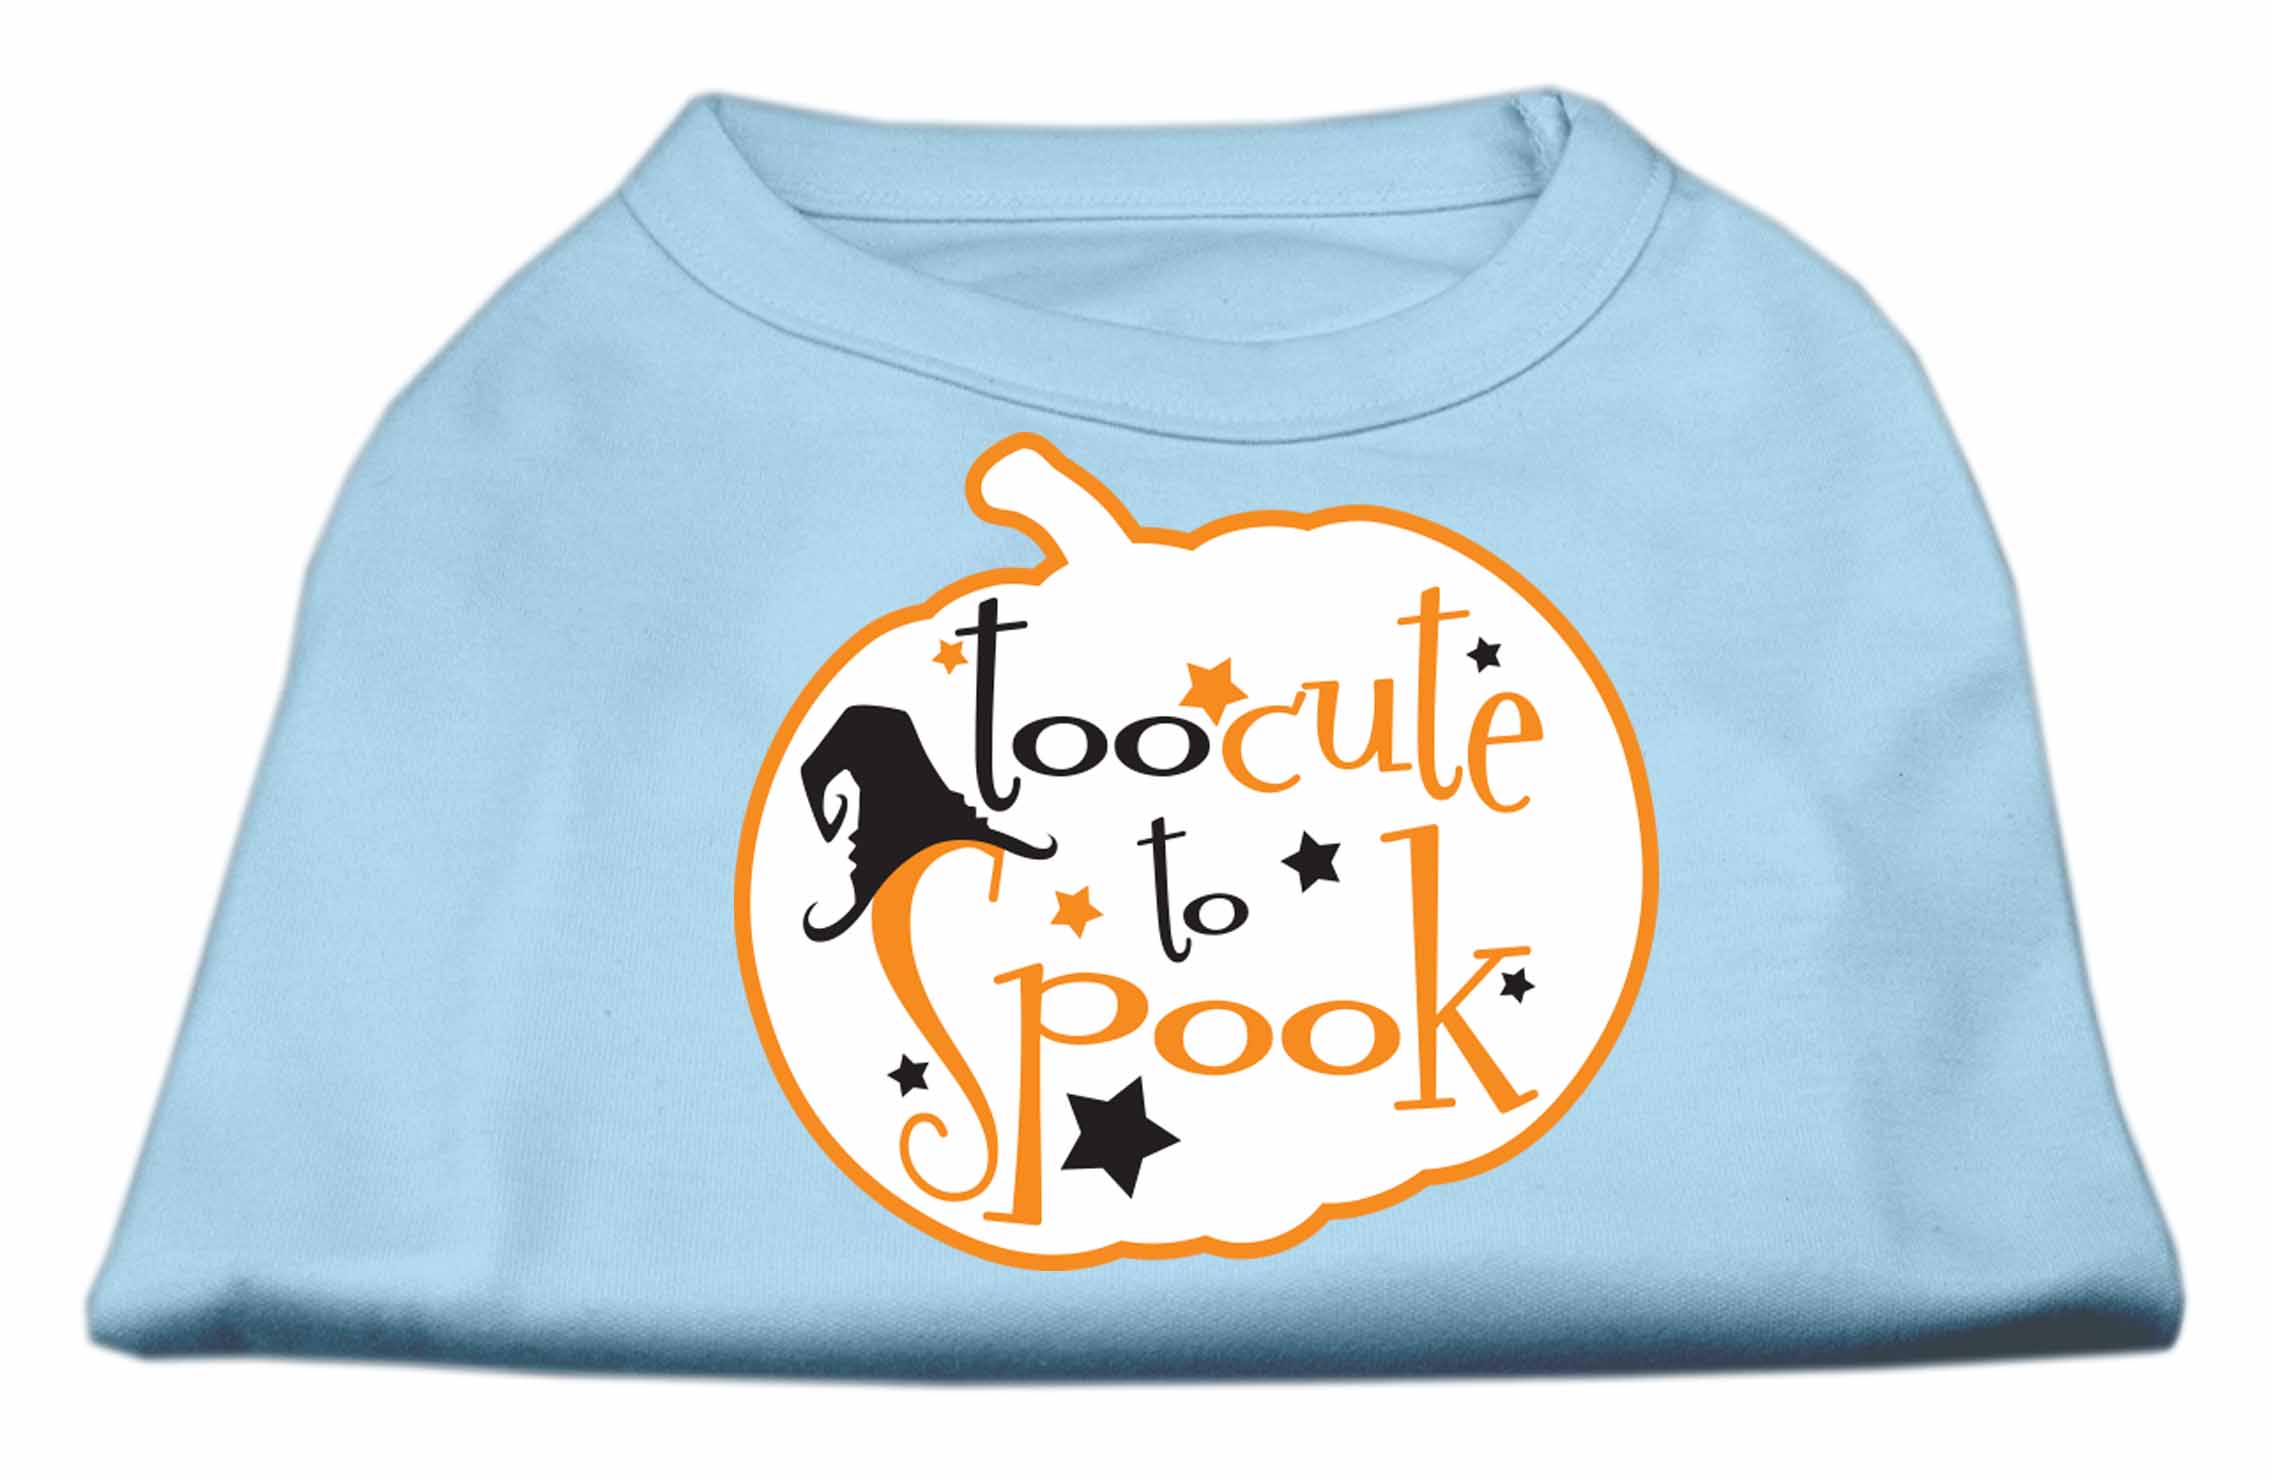 Too Cute to Spook Screen Print Dog Shirt Baby Blue XL